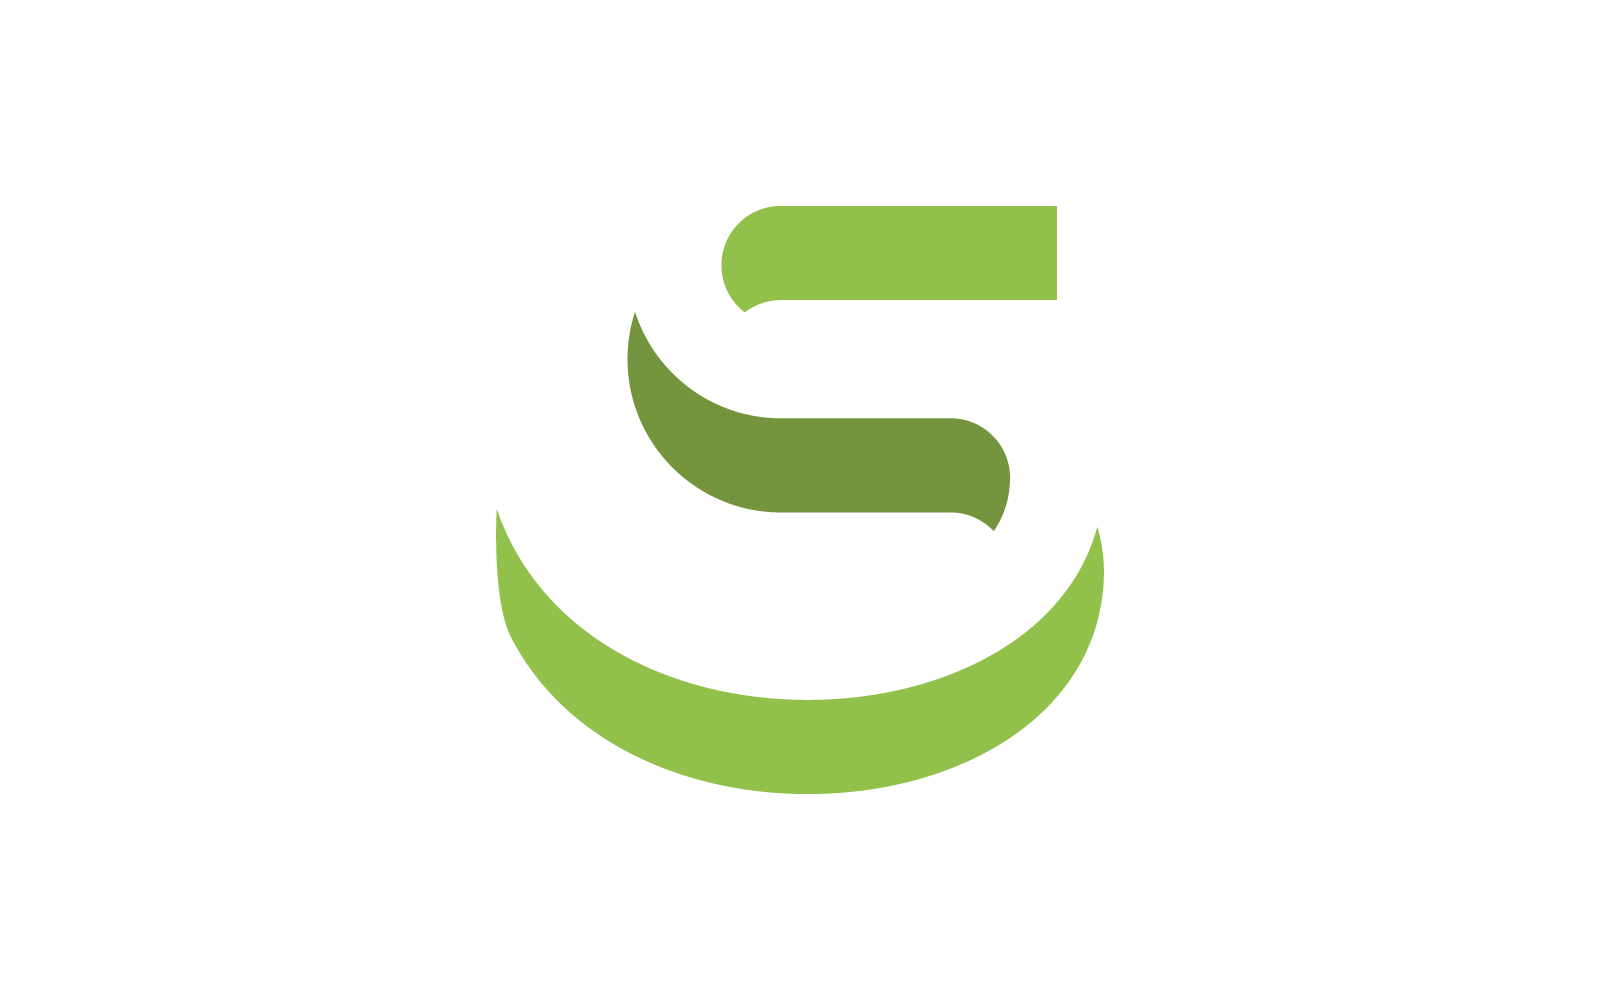 S letter illustration logo icon flat design vector